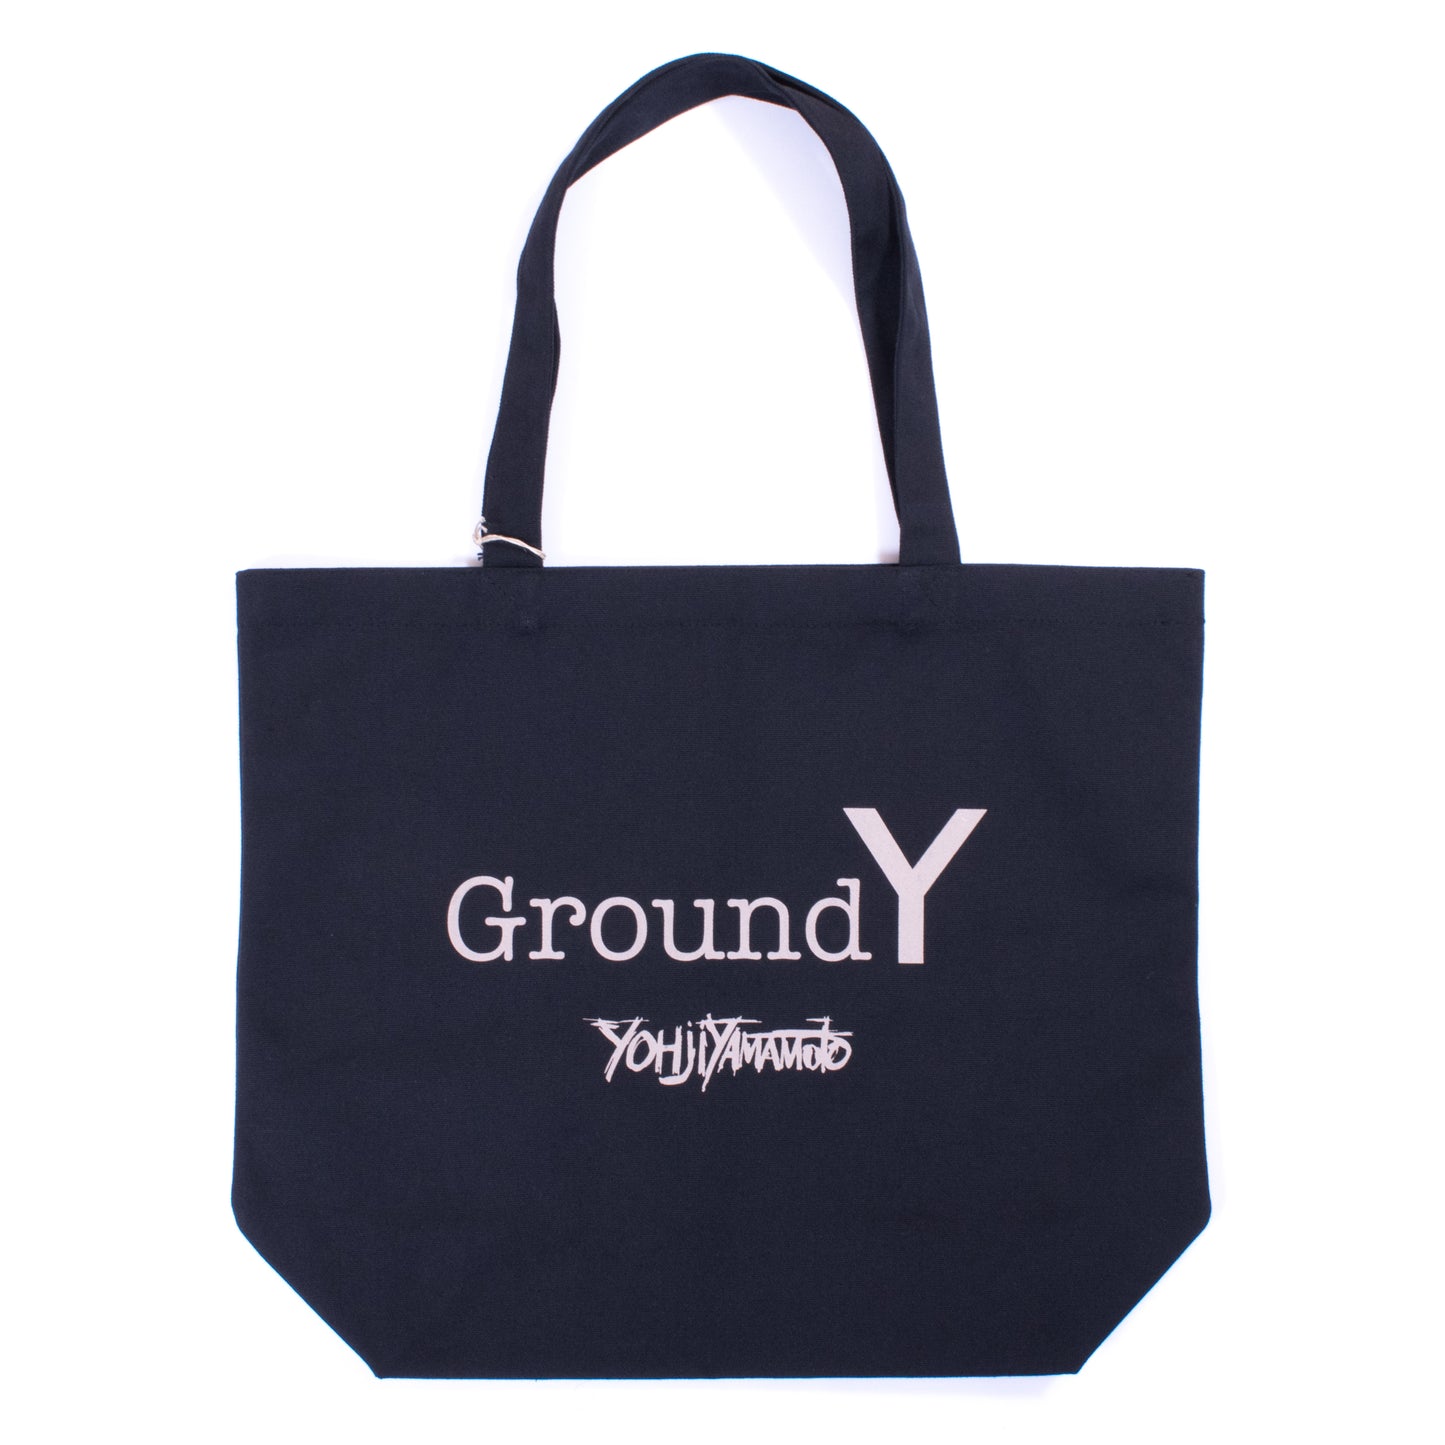 Yohji Yamamoto GroundY Tote Bag